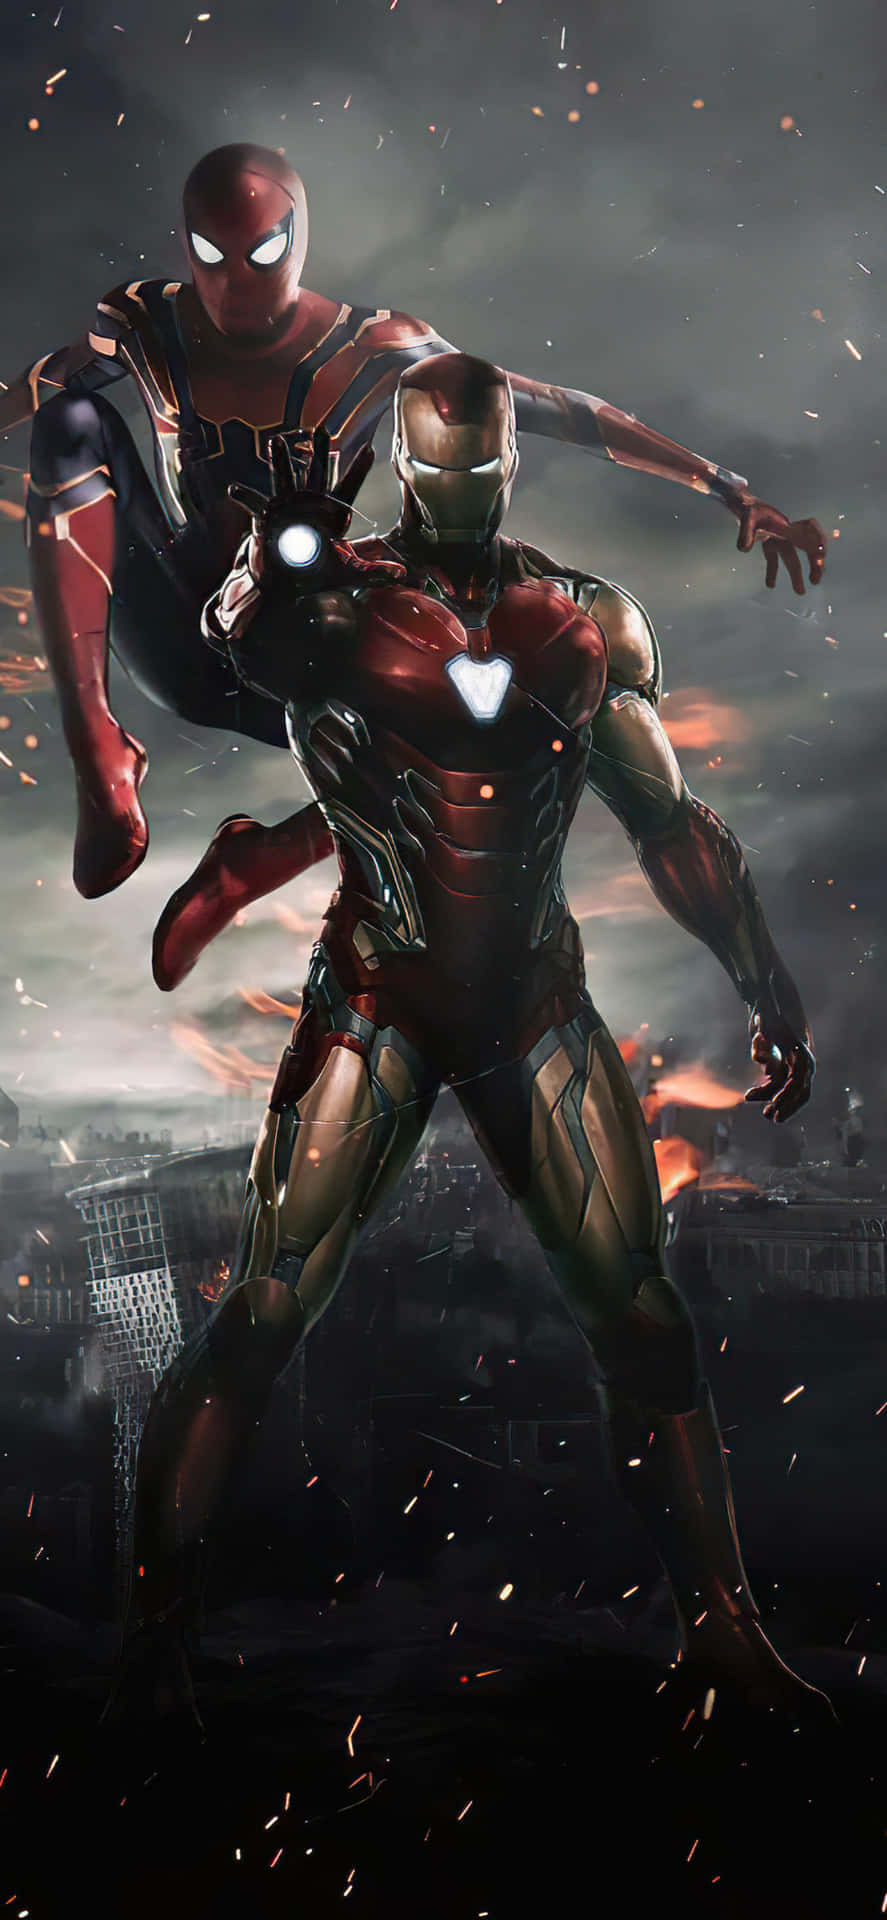 Iphonex Bakgrundsbild: Iron Man Med Spiderman.